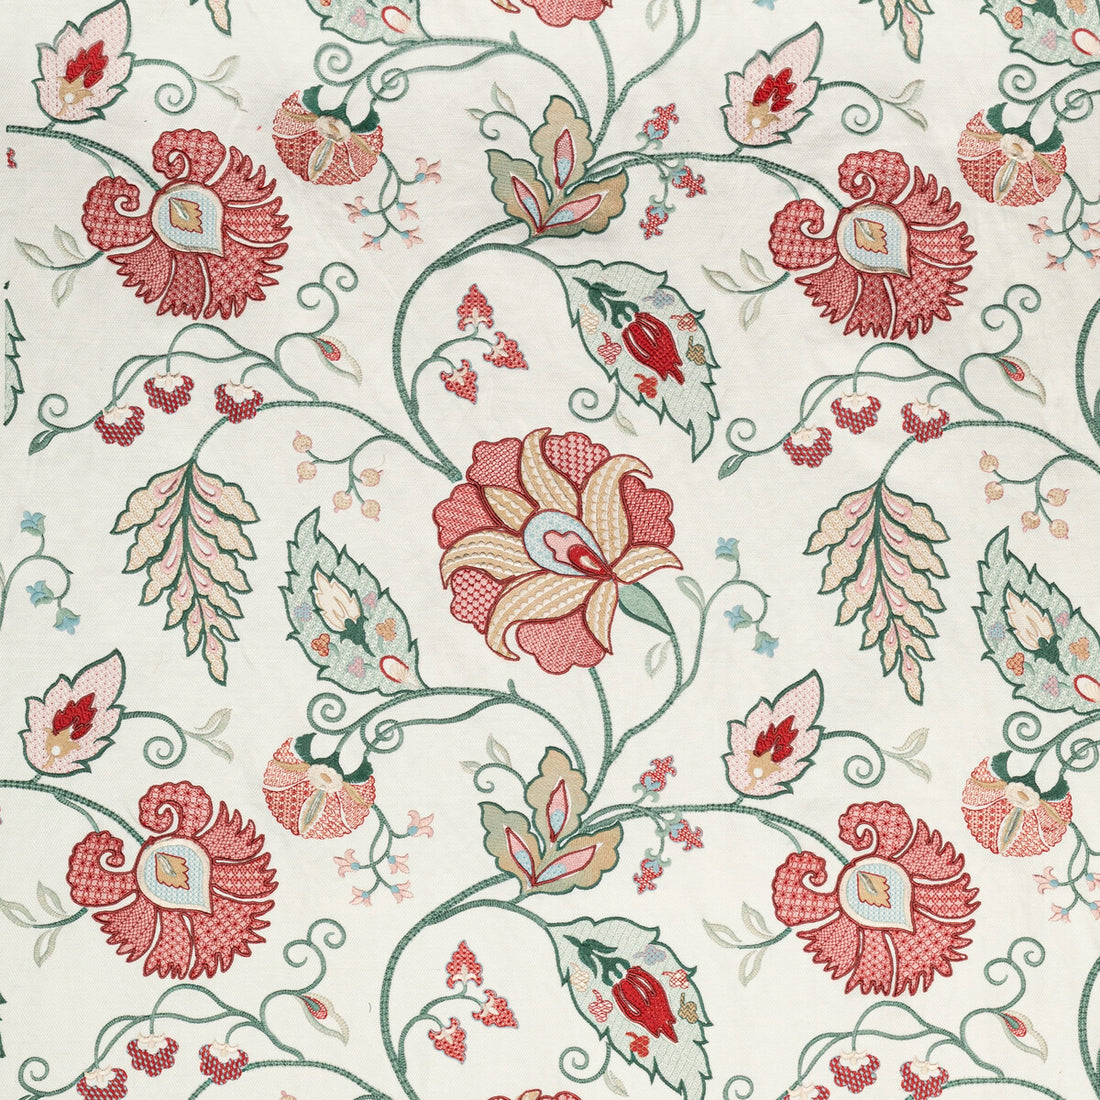 Shiraz Emb fabric in rose/jade color - pattern 2020215.97.0 - by Lee Jofa in the Oscar De La Renta IV collection